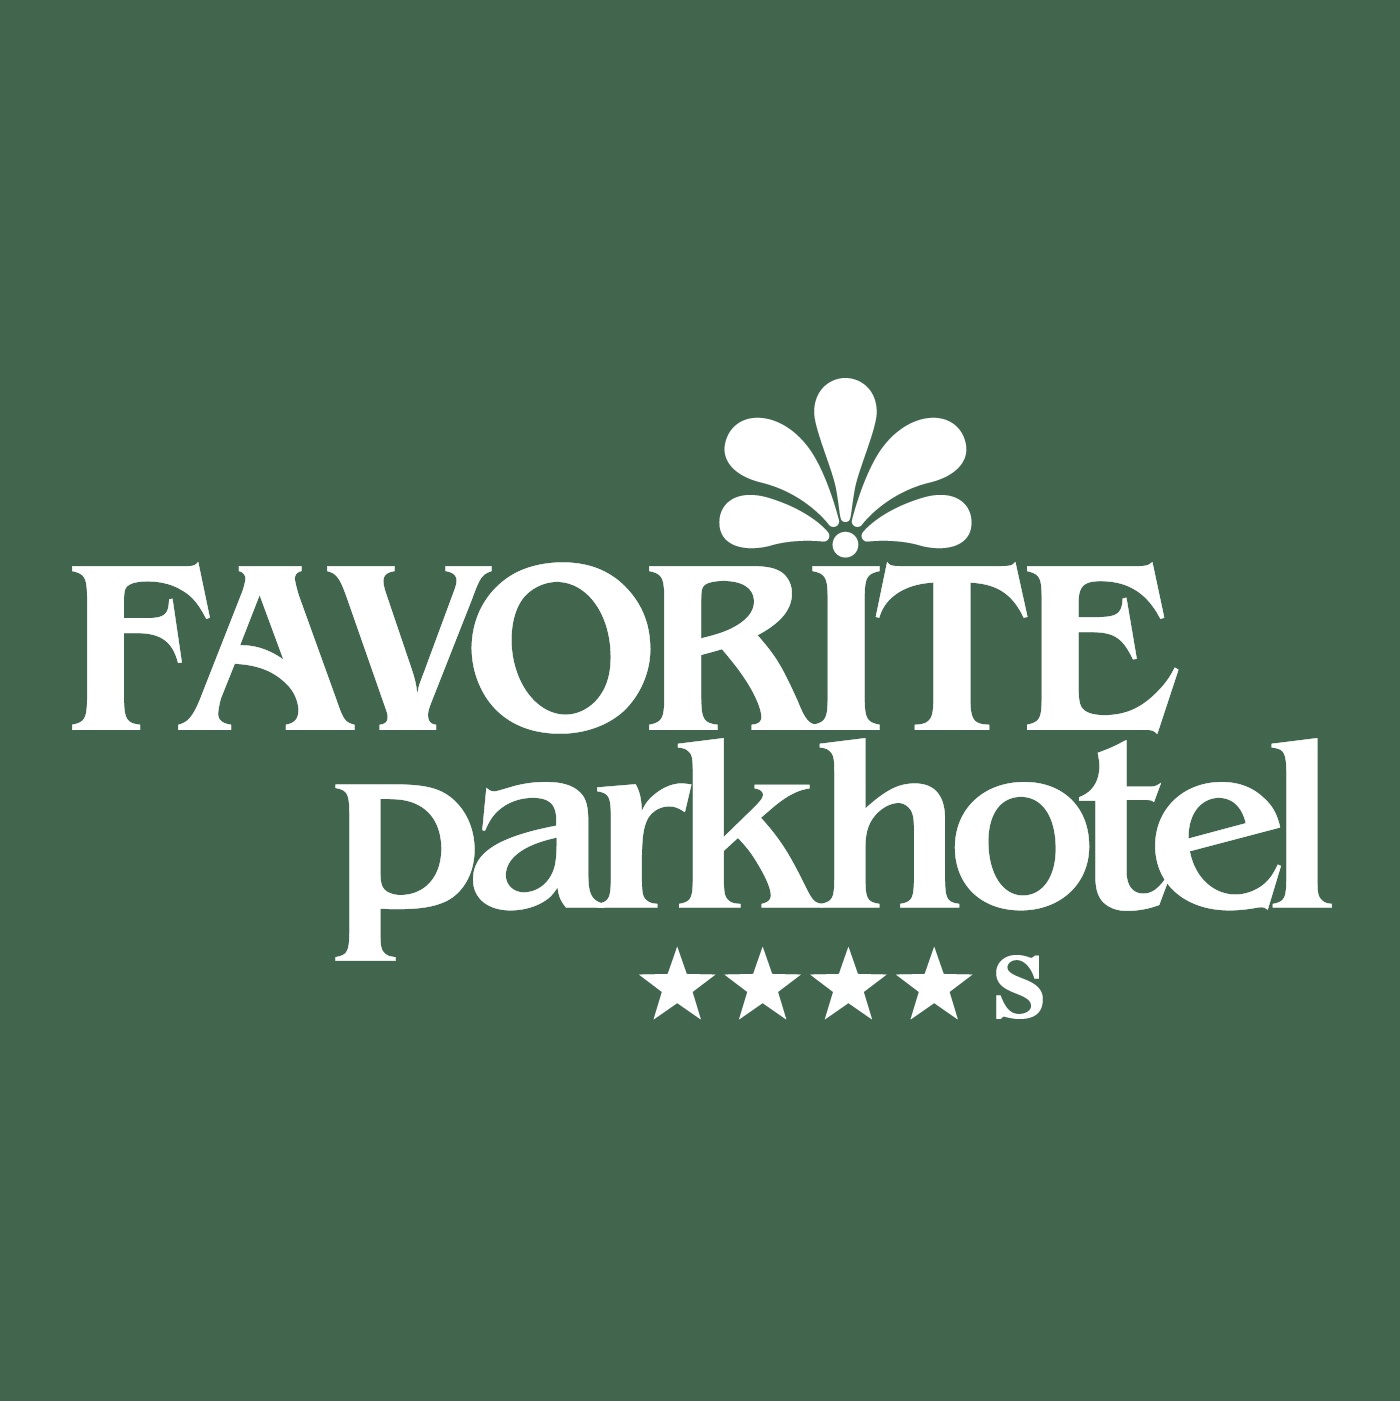 Favorite Parkhotel